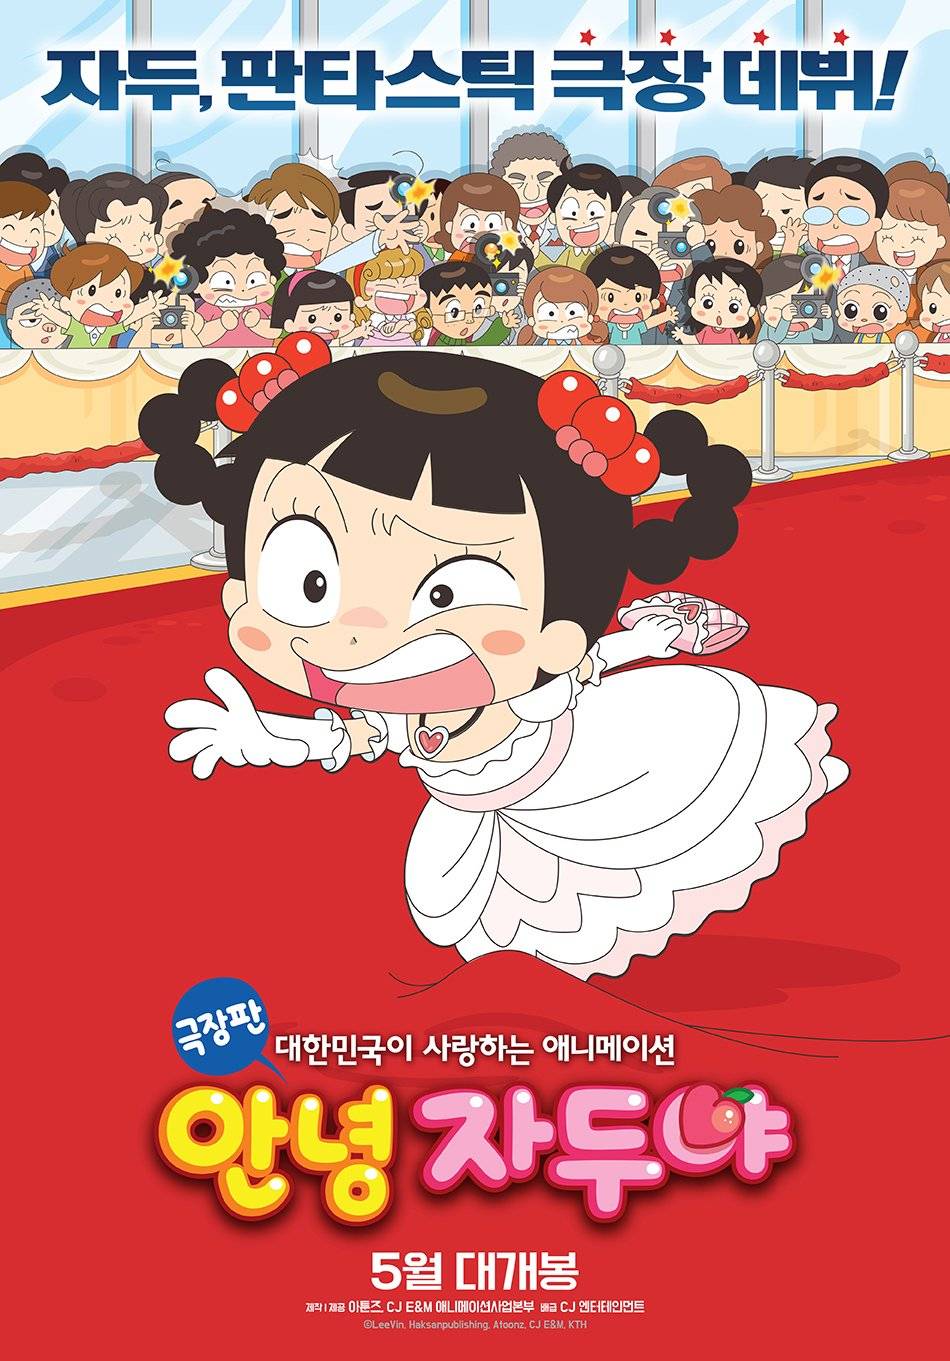 Upcoming Korean animated movie 'Theatrical Cut - Hello Jadu' @ HanCinema